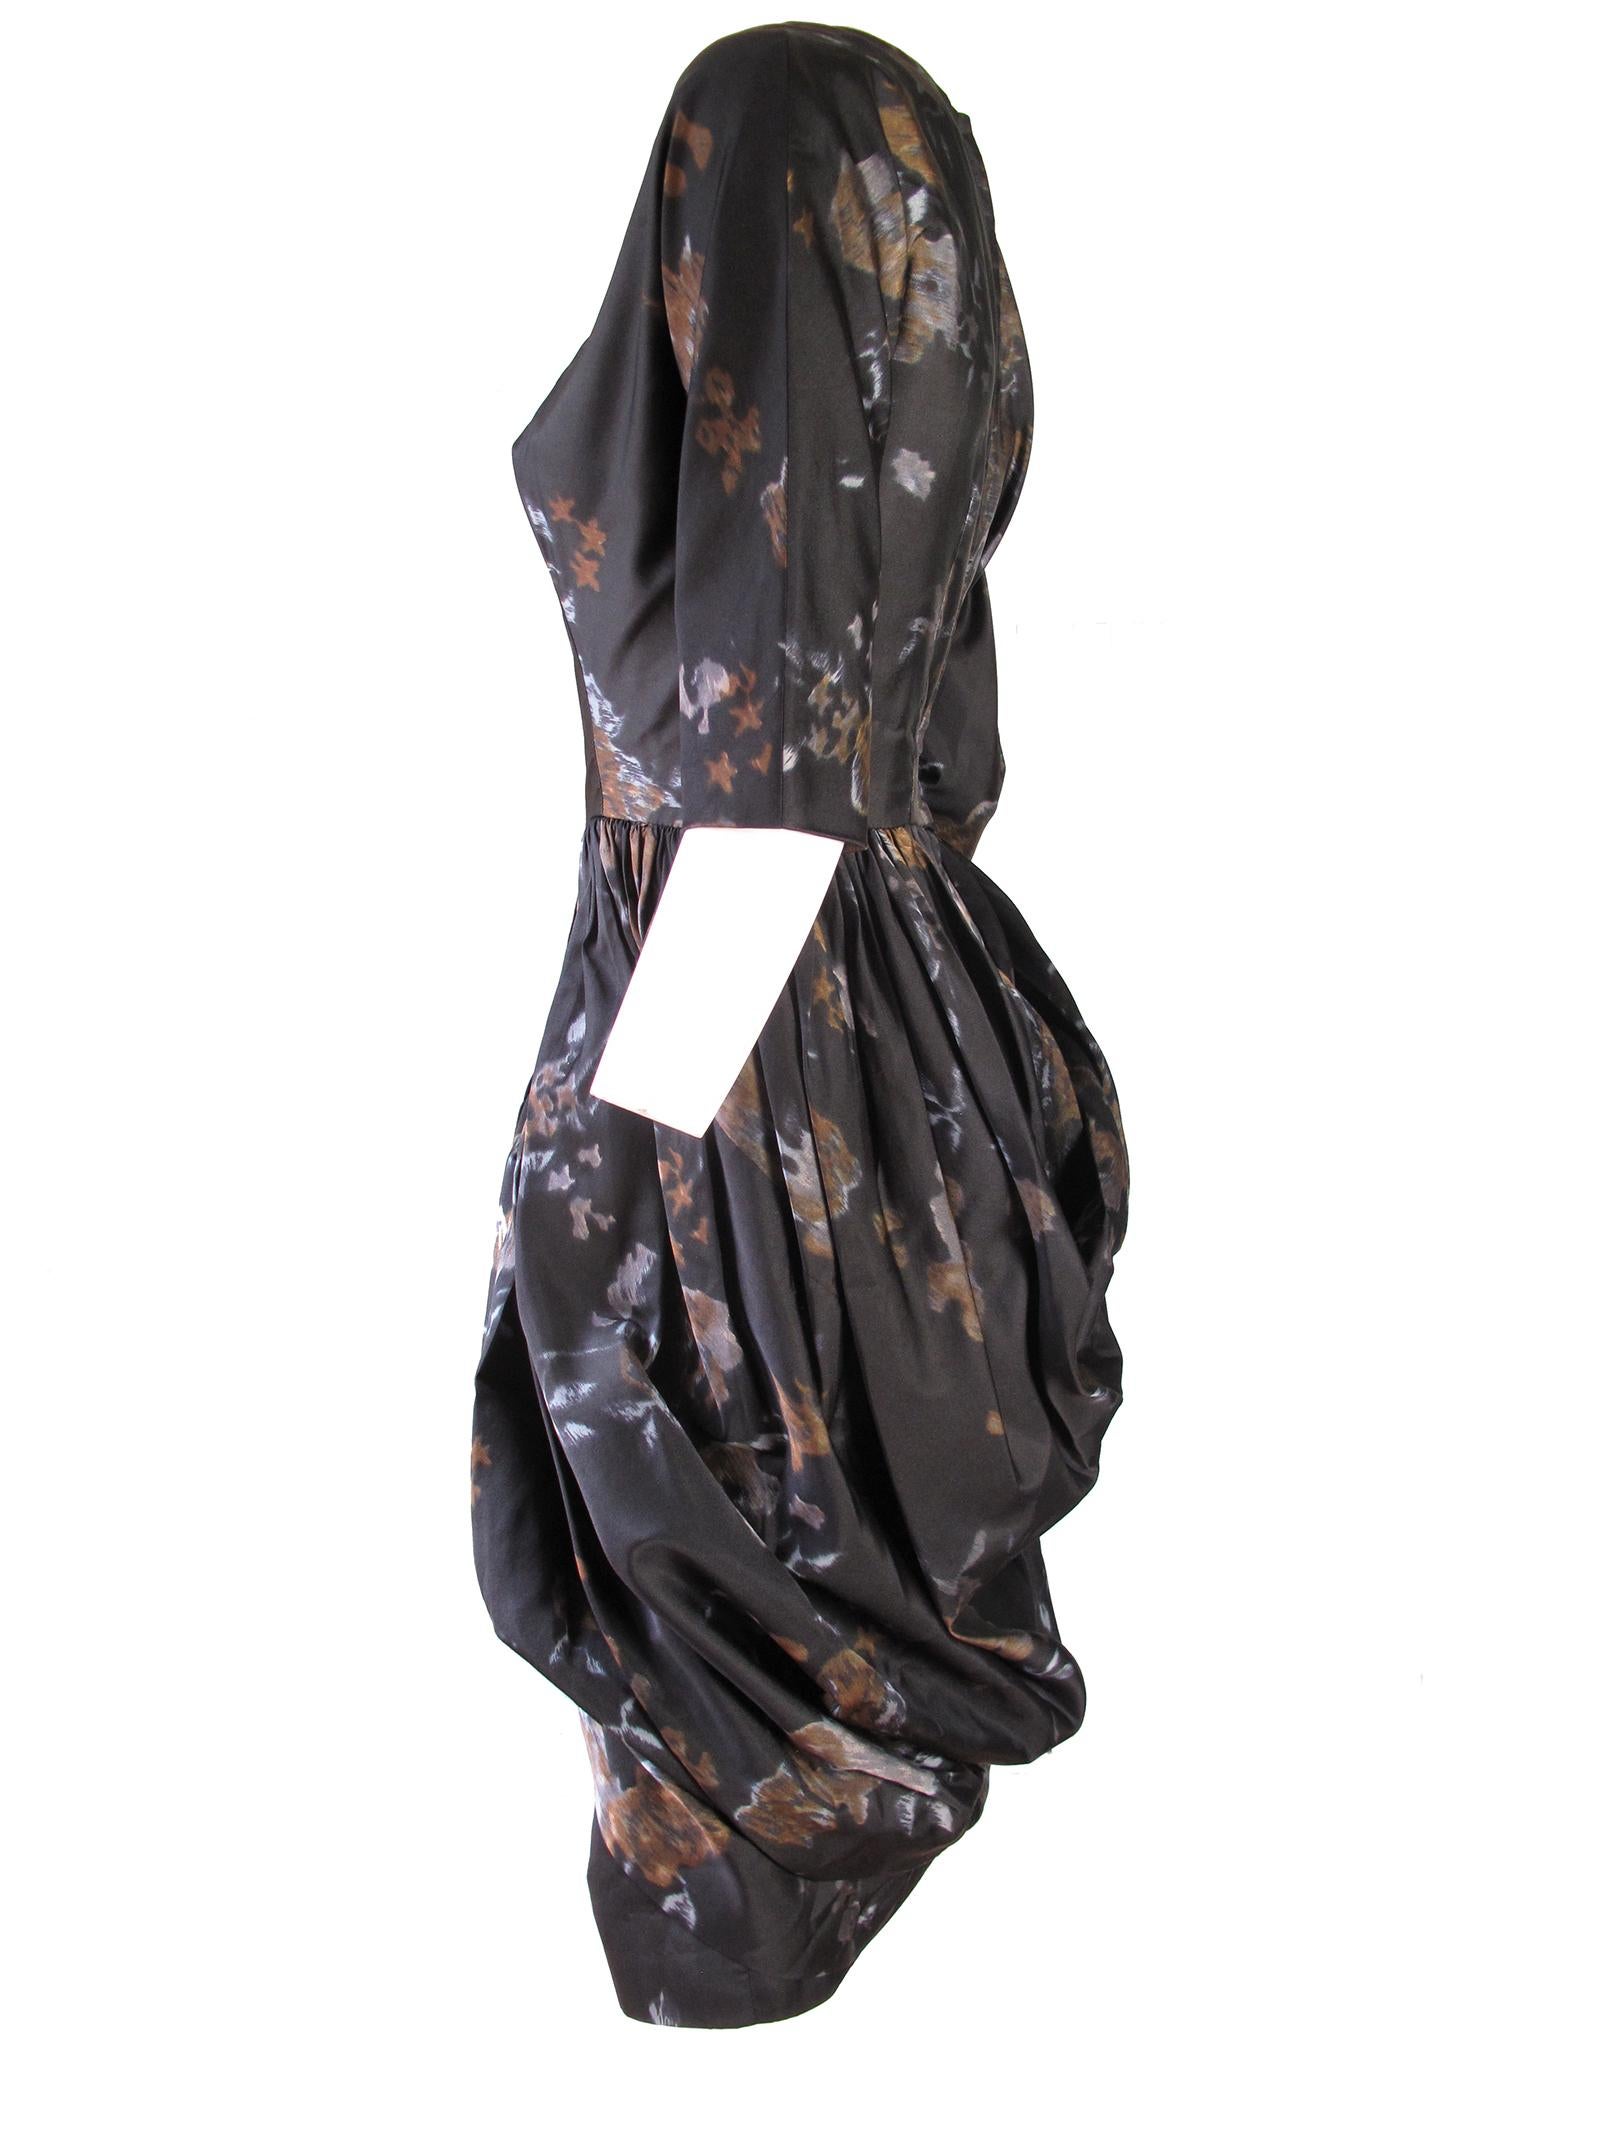 Ceil Chapman Floral Silk Dress, 1950s  (Grau)